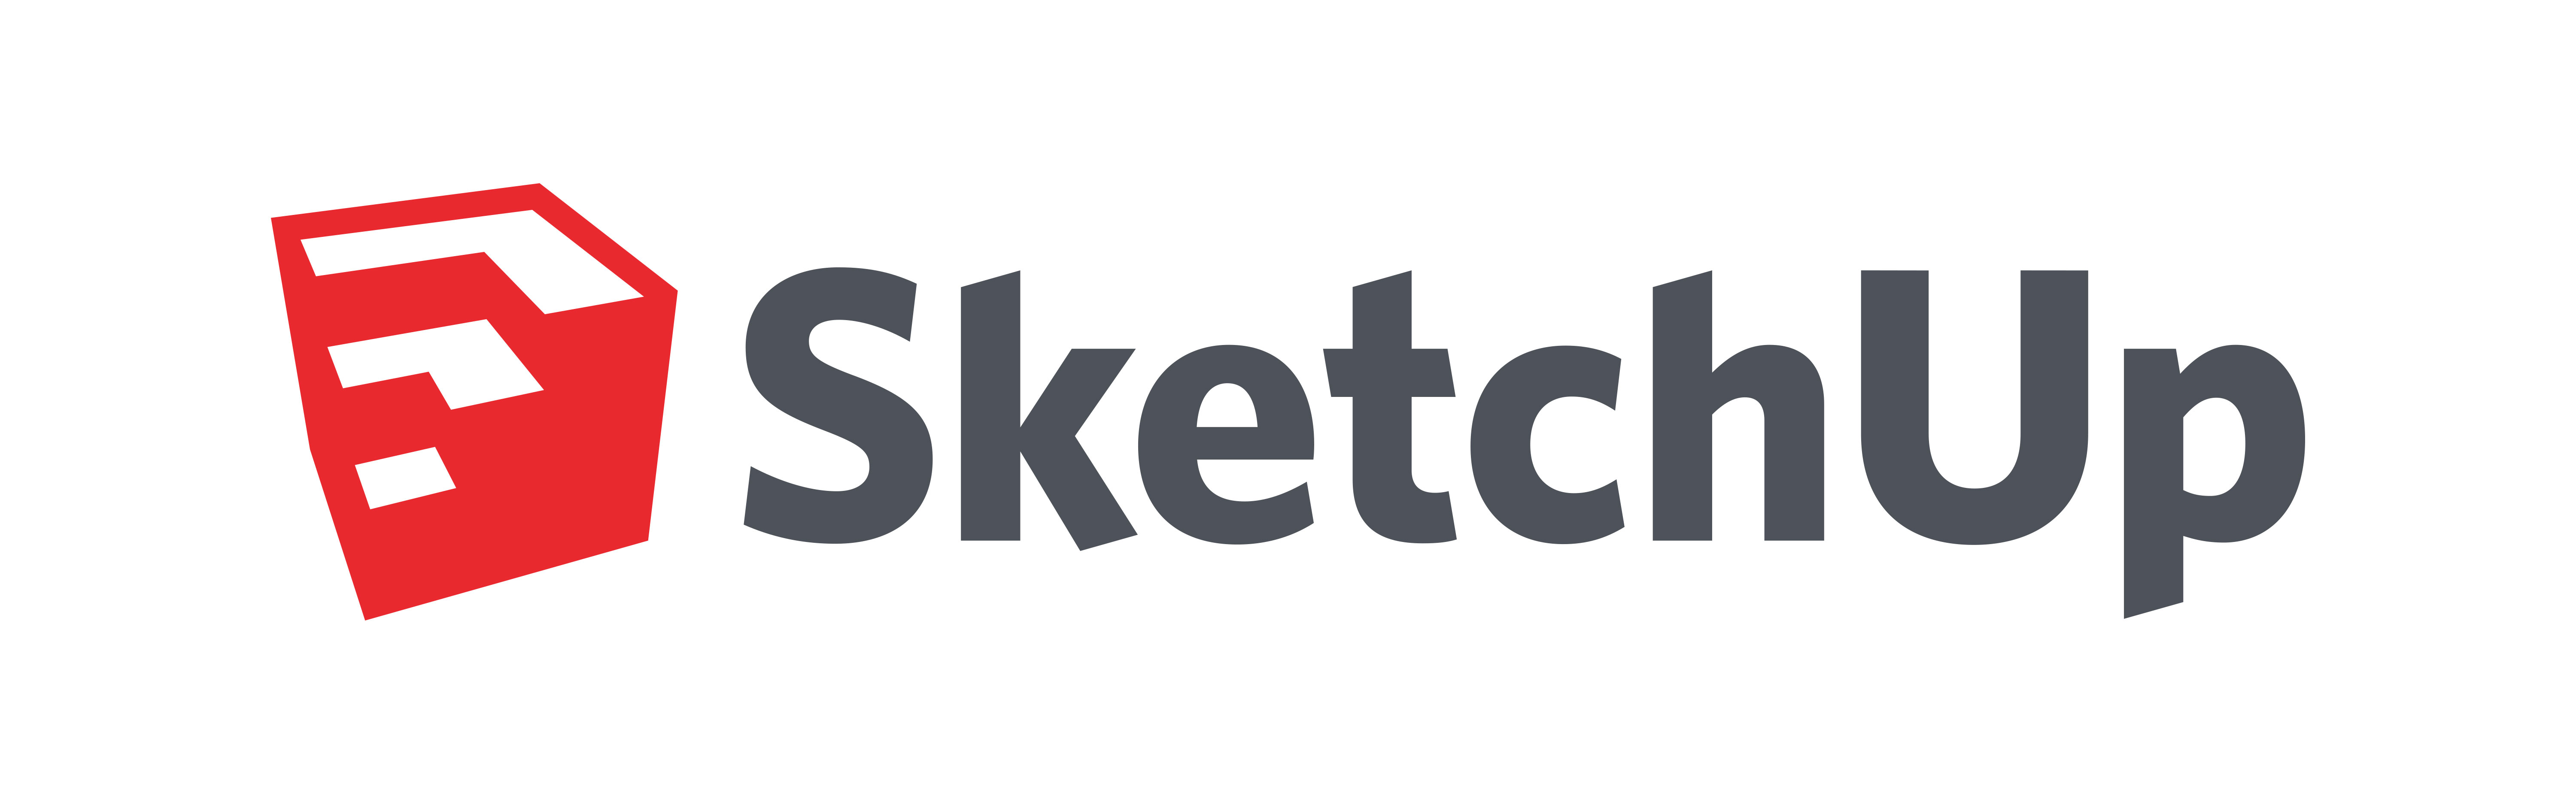 SketchUp Pro 2017 full crack + V-ray 3.4